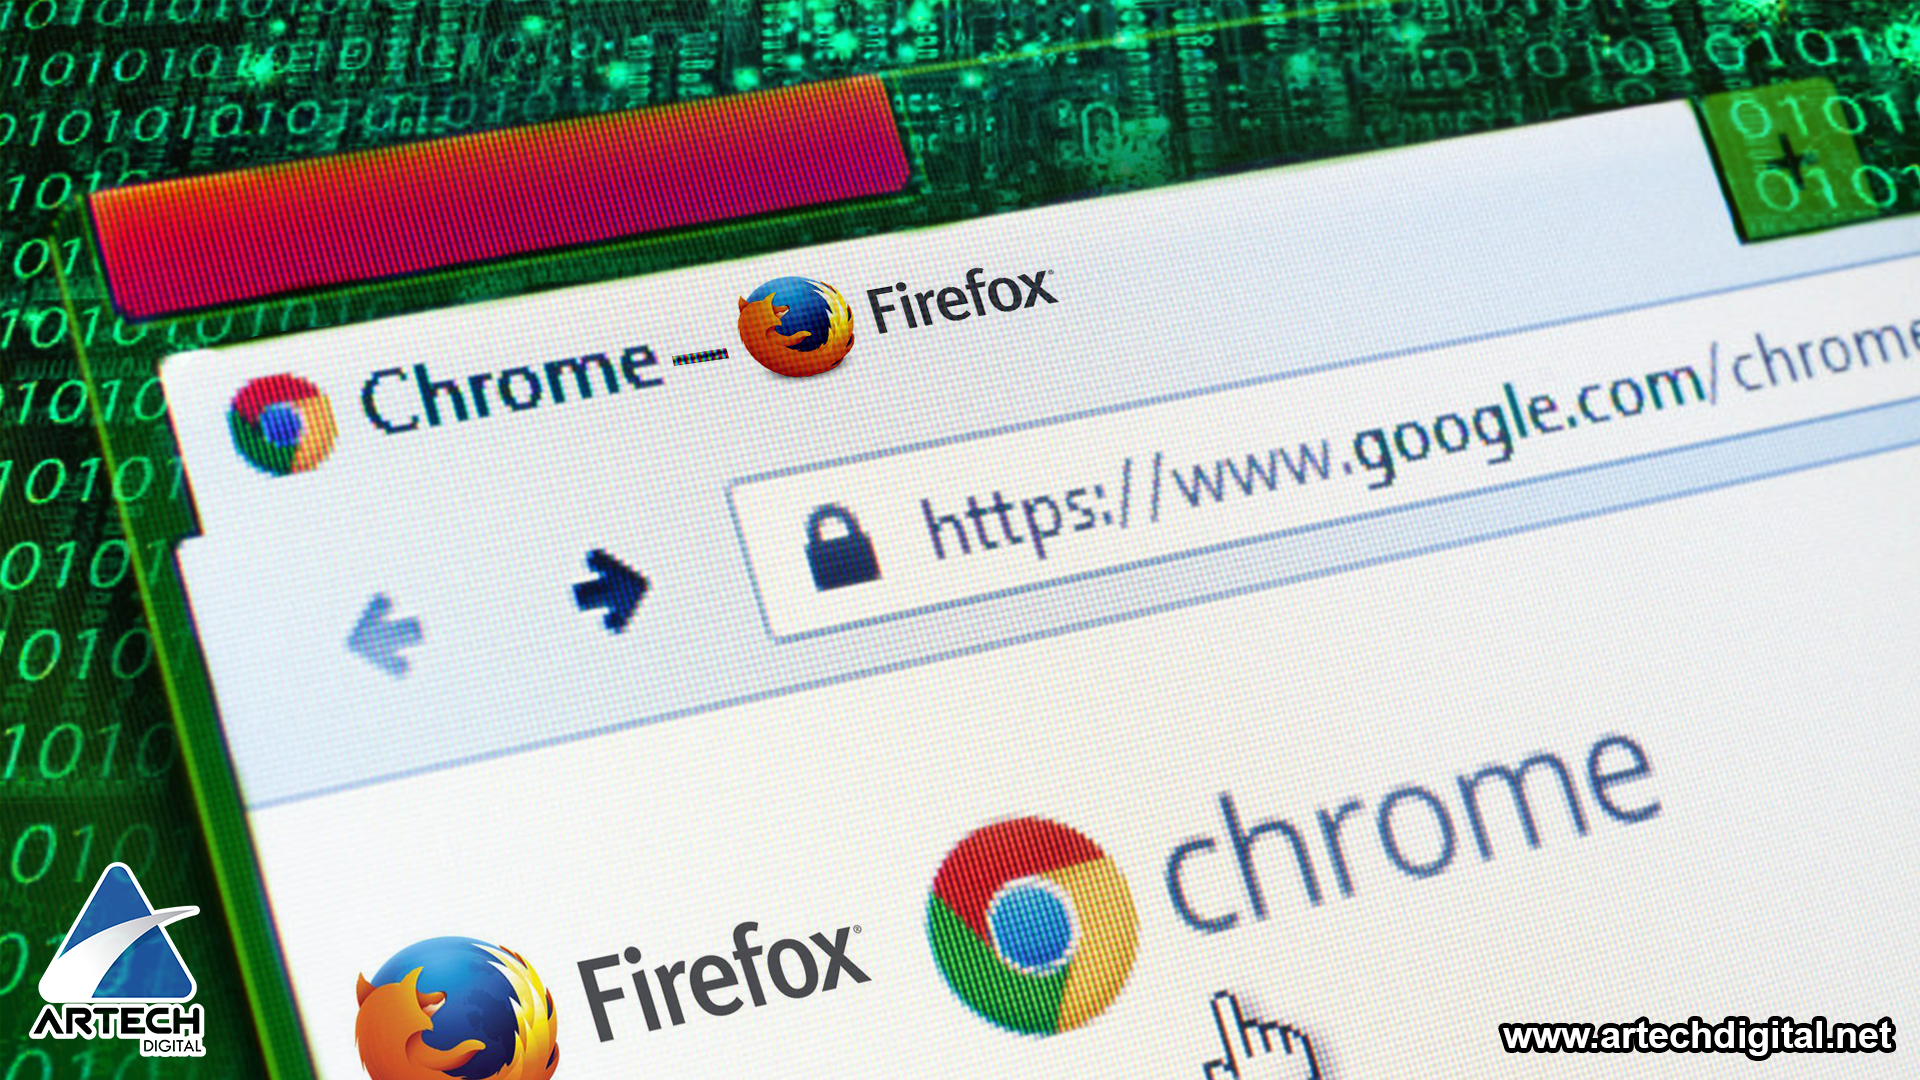 Malware - Chrome - firefox - Artech Digital